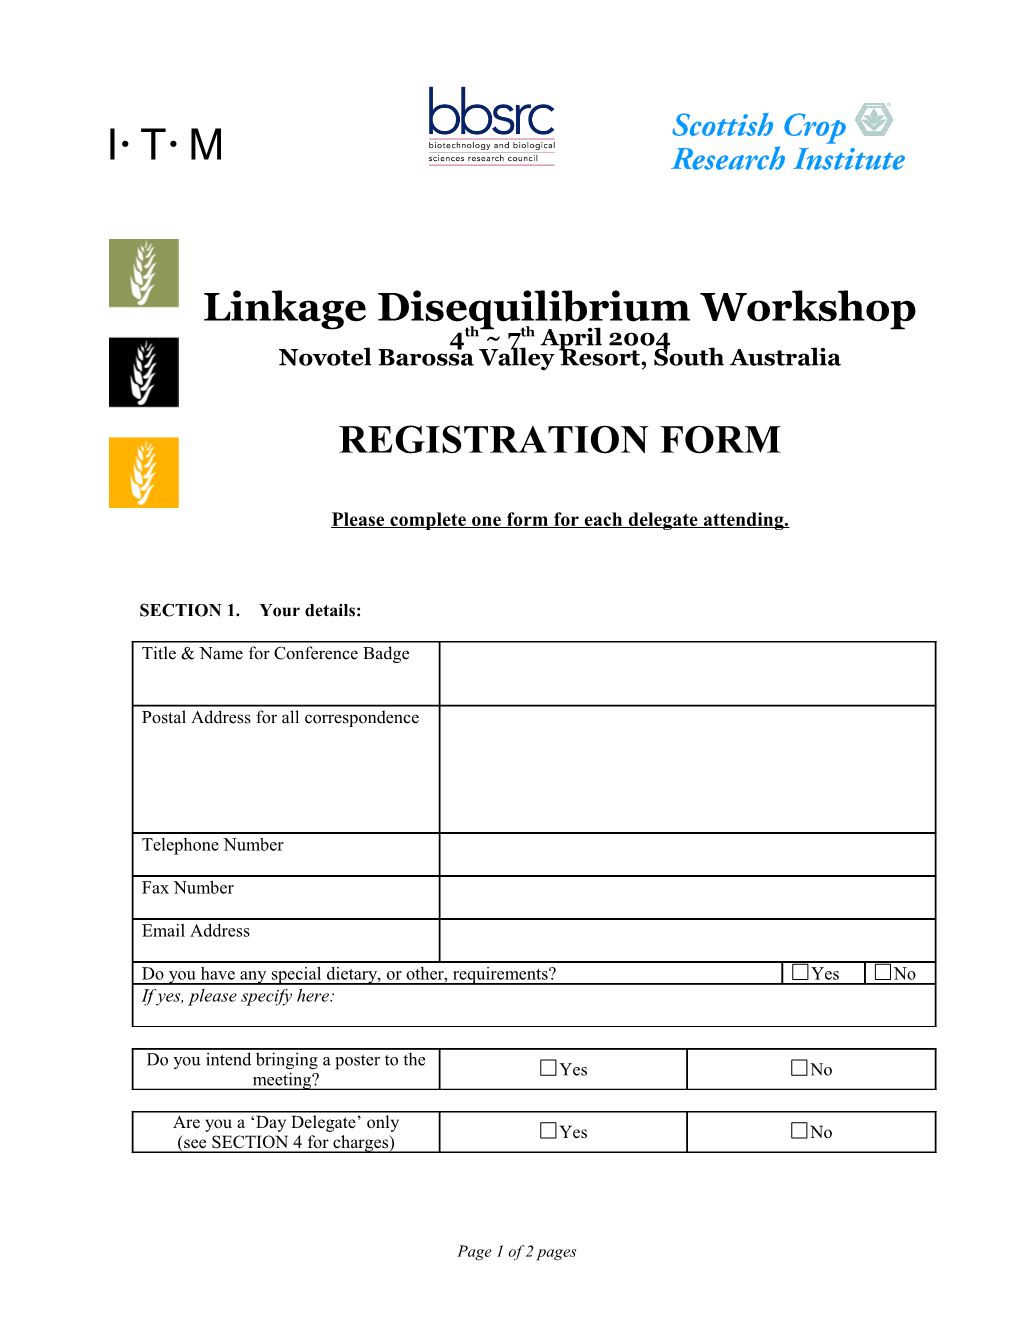 LD Registration Form